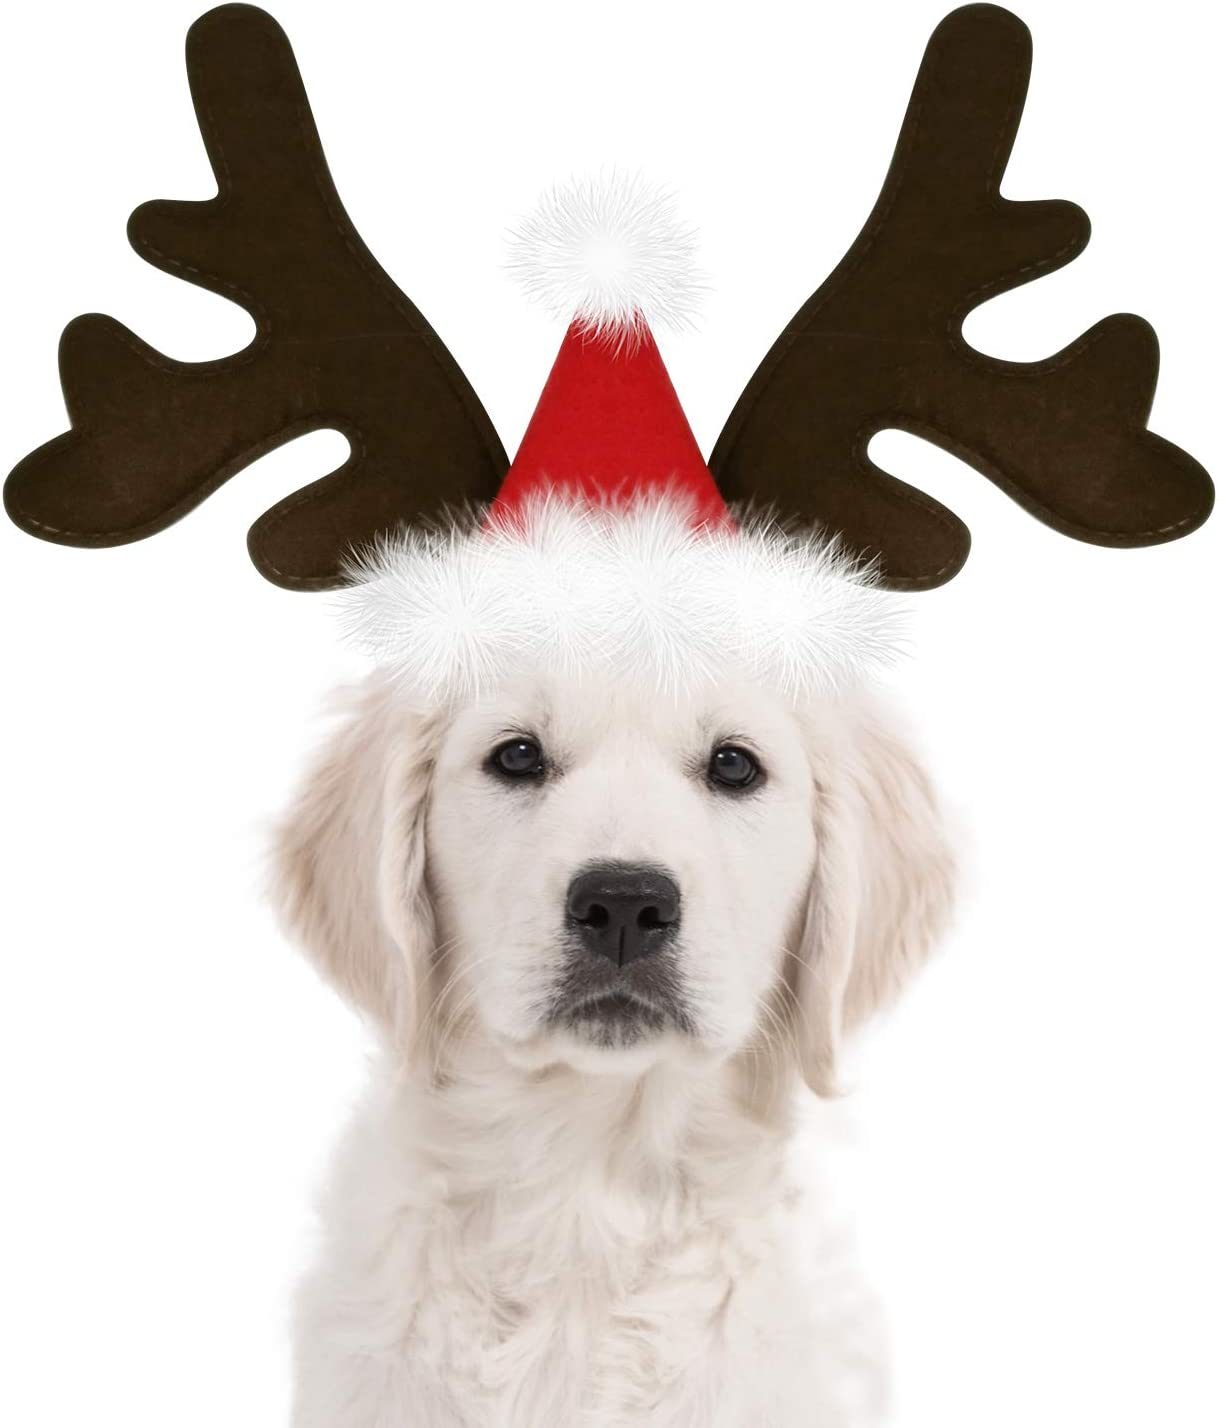 Dog Christmas Reindeer Antlers Headband Classic Elk Hat Headwear Pet Costumes Accessories pet gift